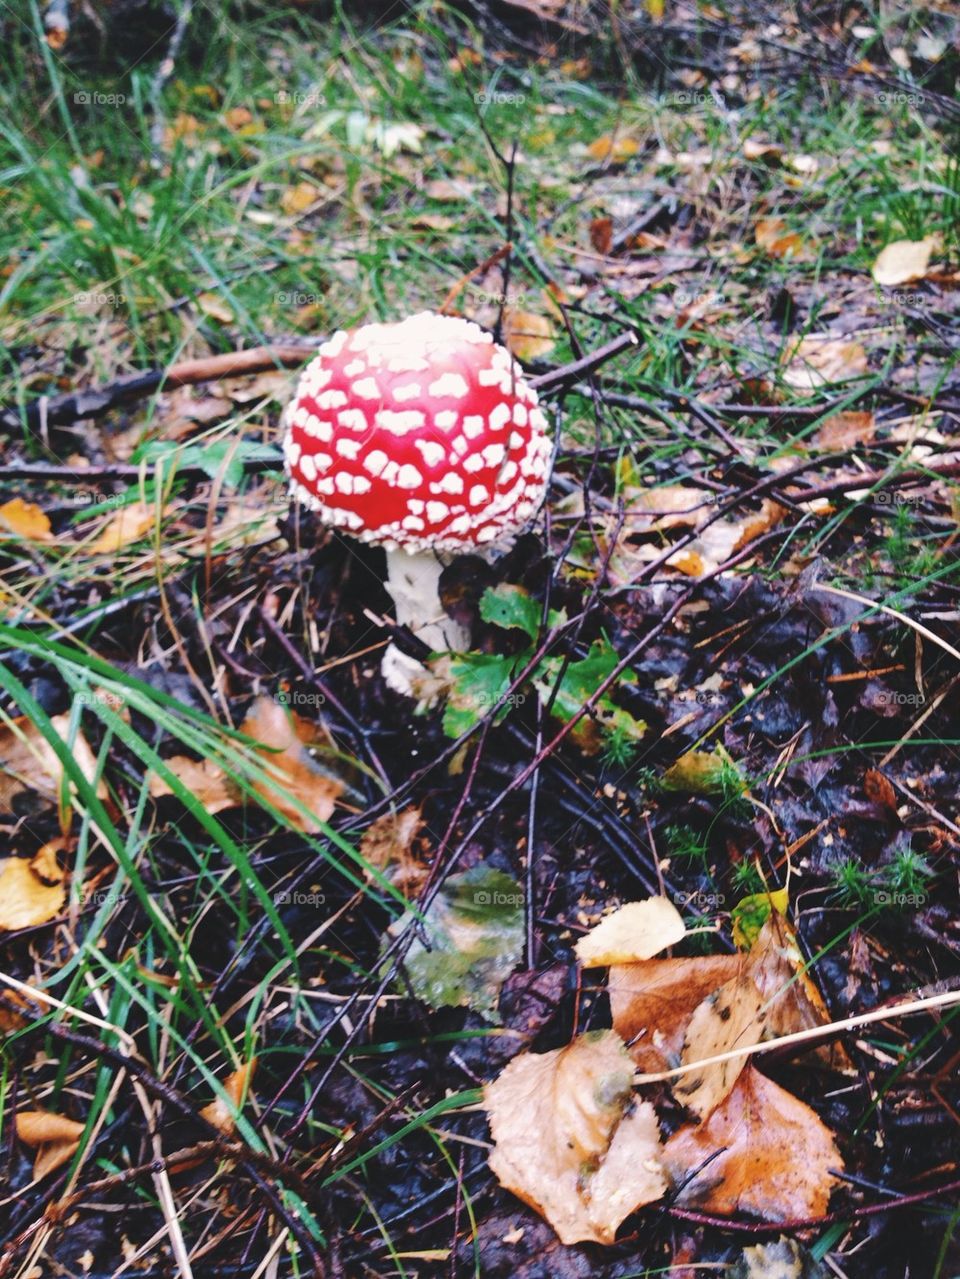 My first mushroom:)